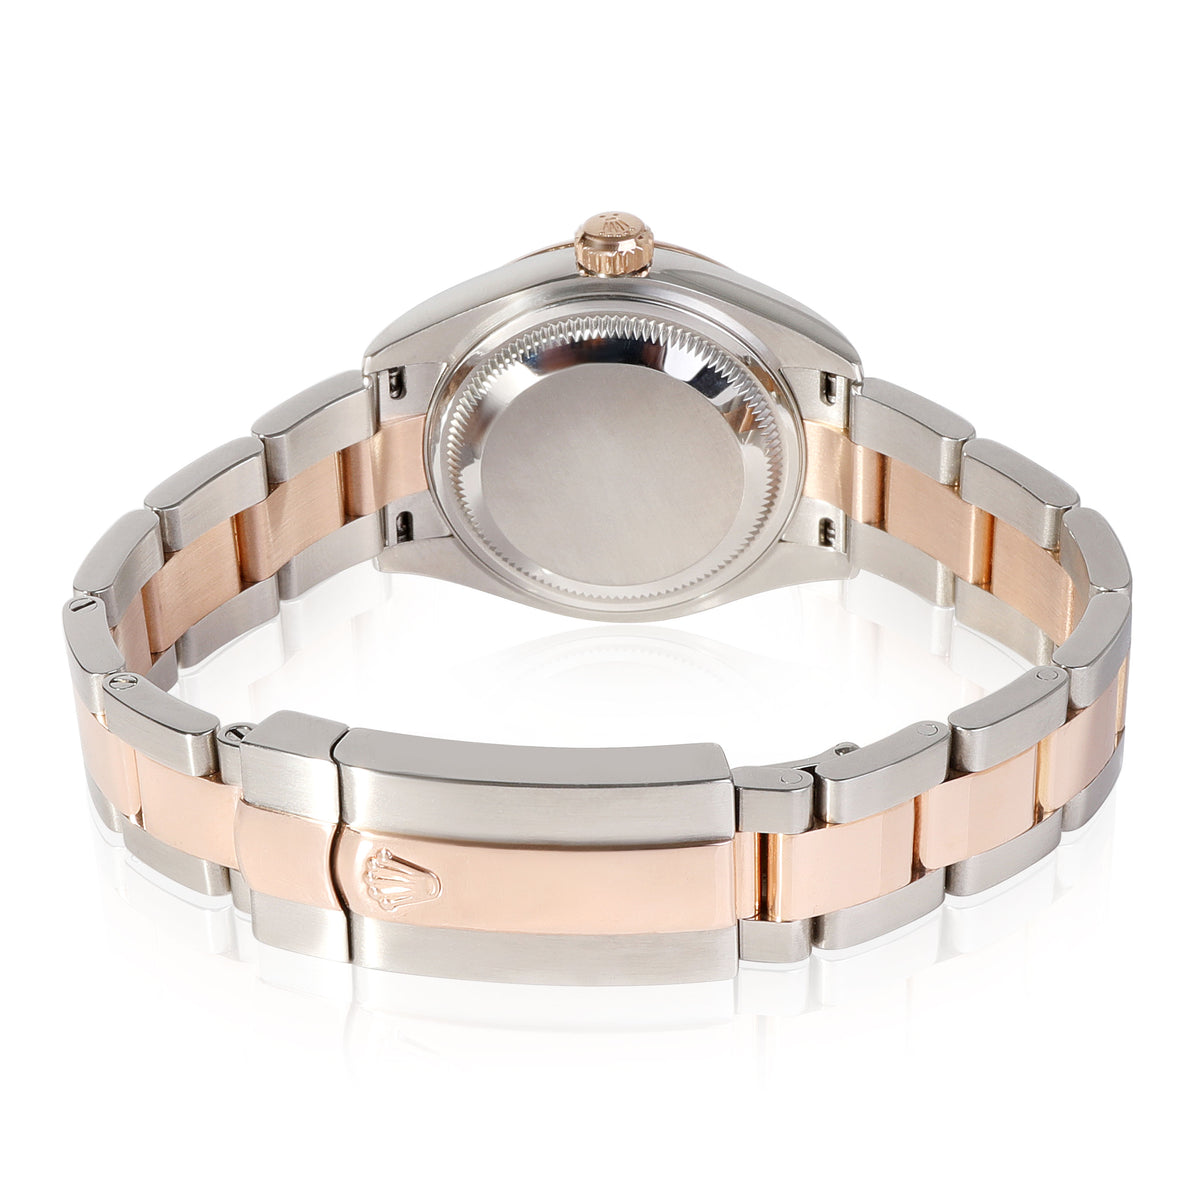 Rolex Datejust 279171 Women's Watch in 18kt Stainless Steel/Rose Gold